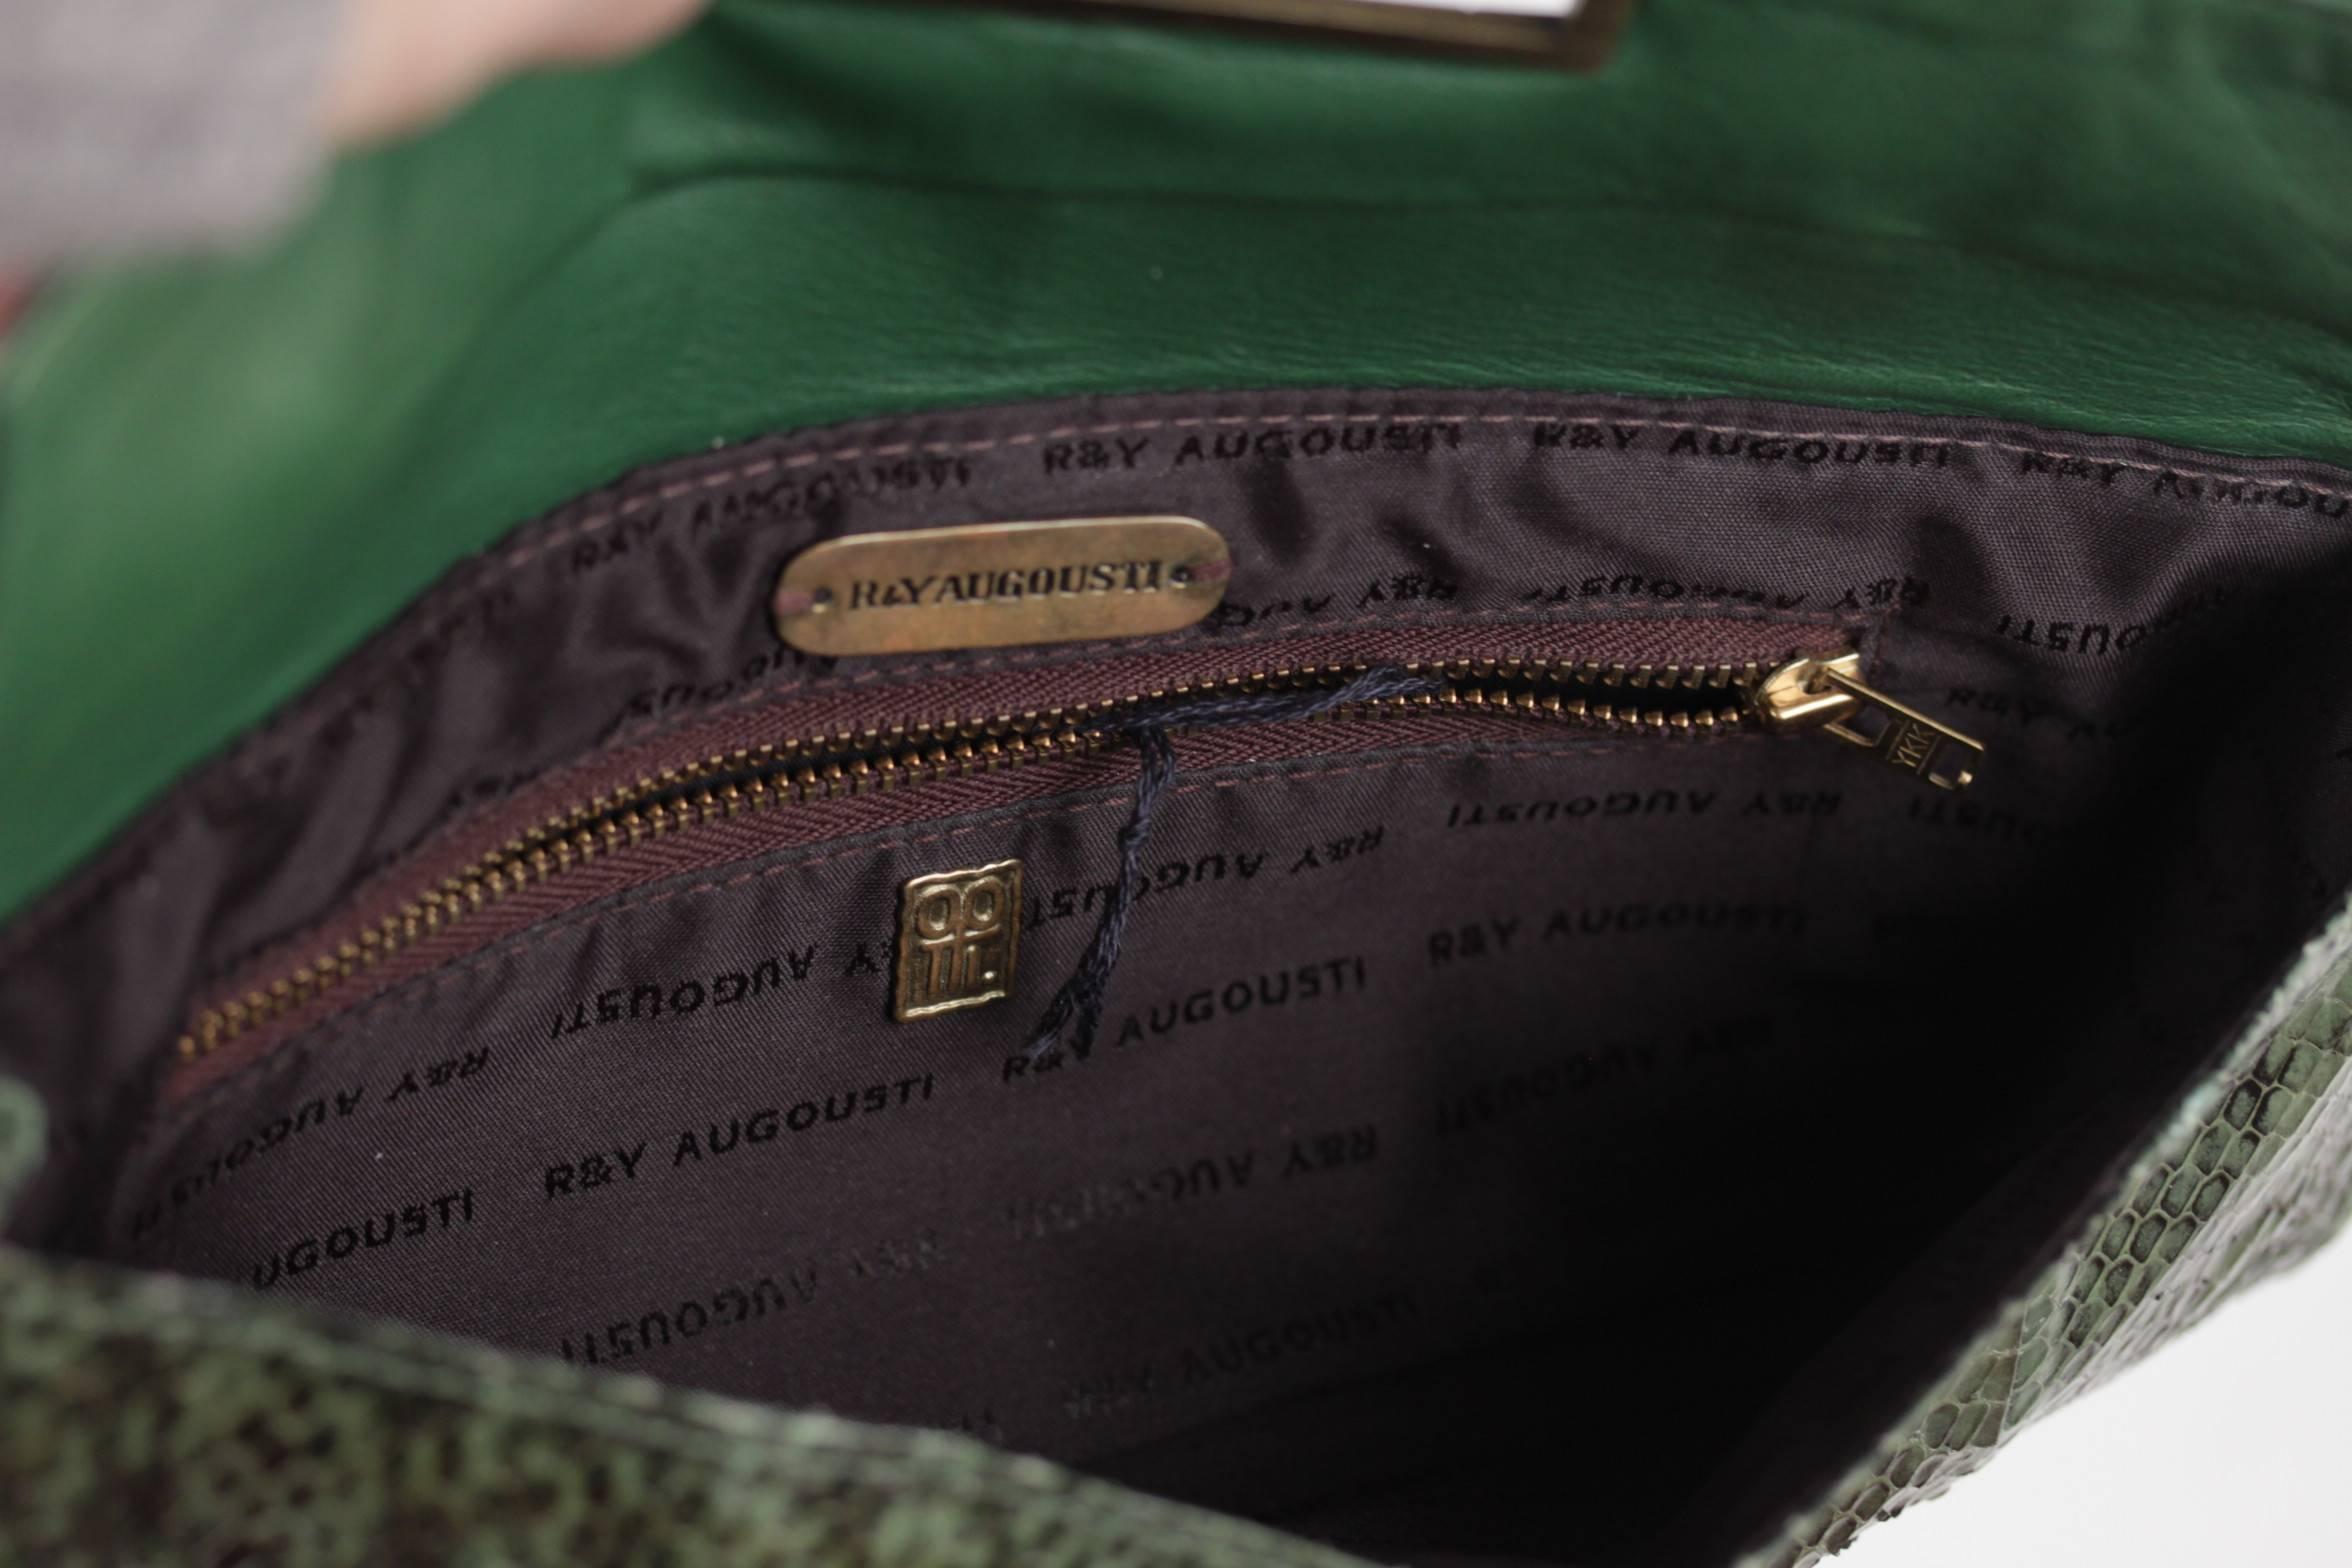 Women's R Y Augousti Green Python Snakeskin Leather Clutch Handbag Purse Pouch Bag